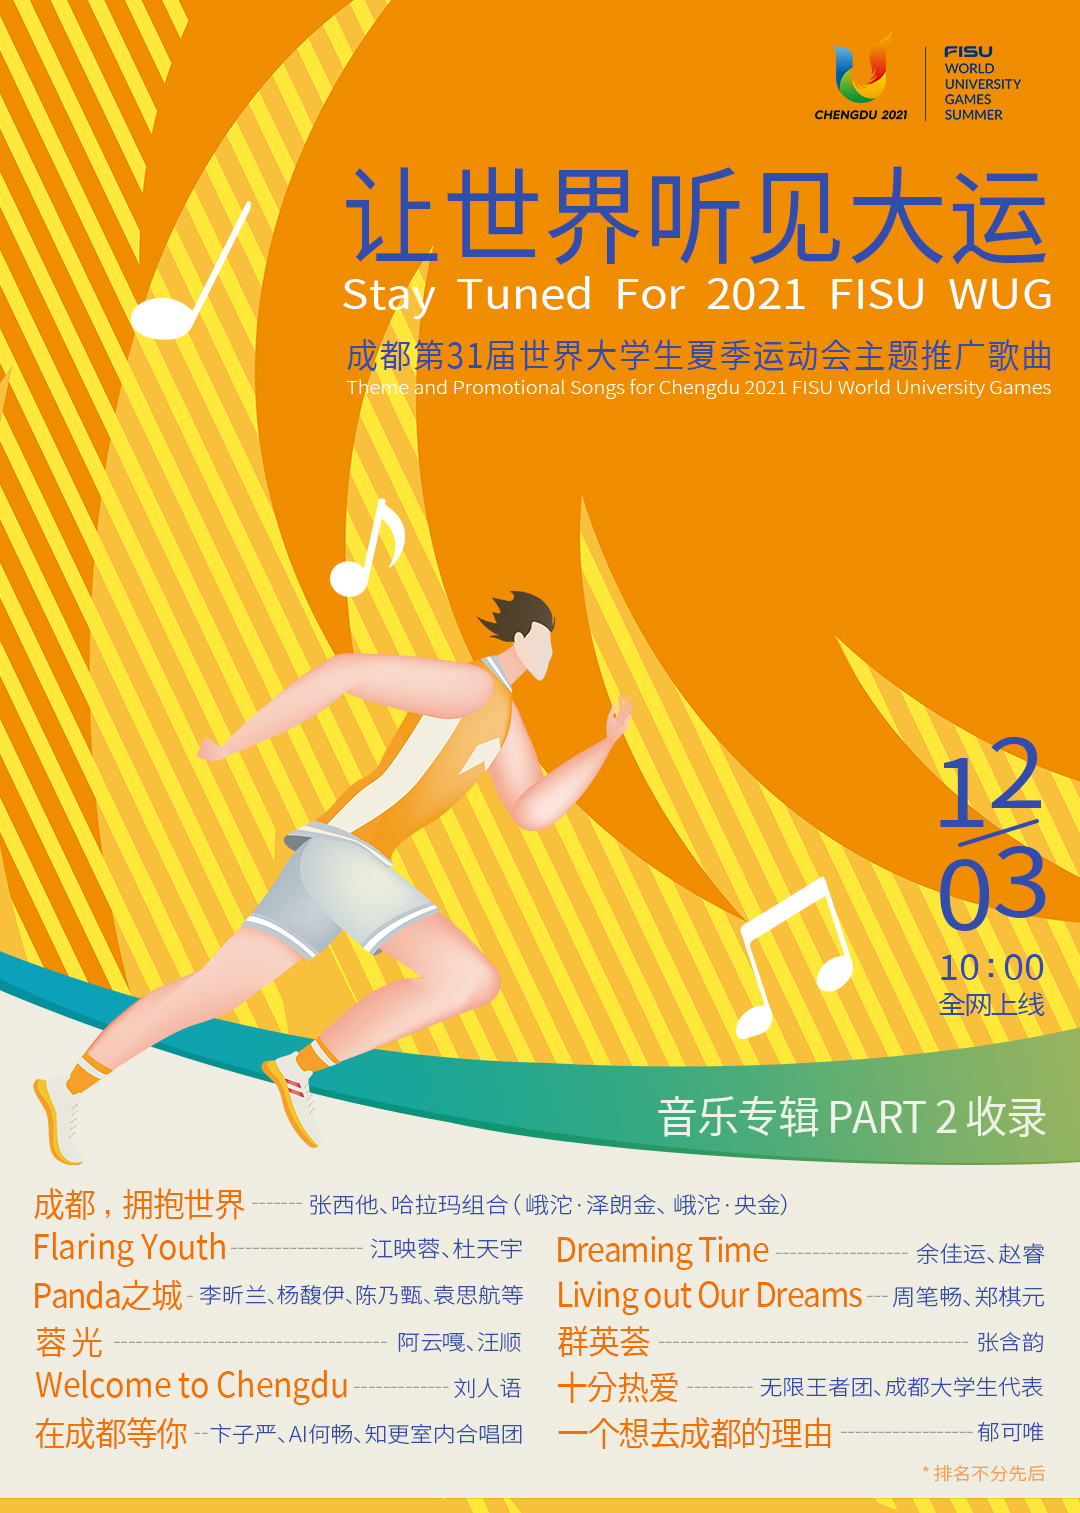 11 promotional songs for chengdu 2021 fisu world university games come online chengdu 2021 fisu world university games